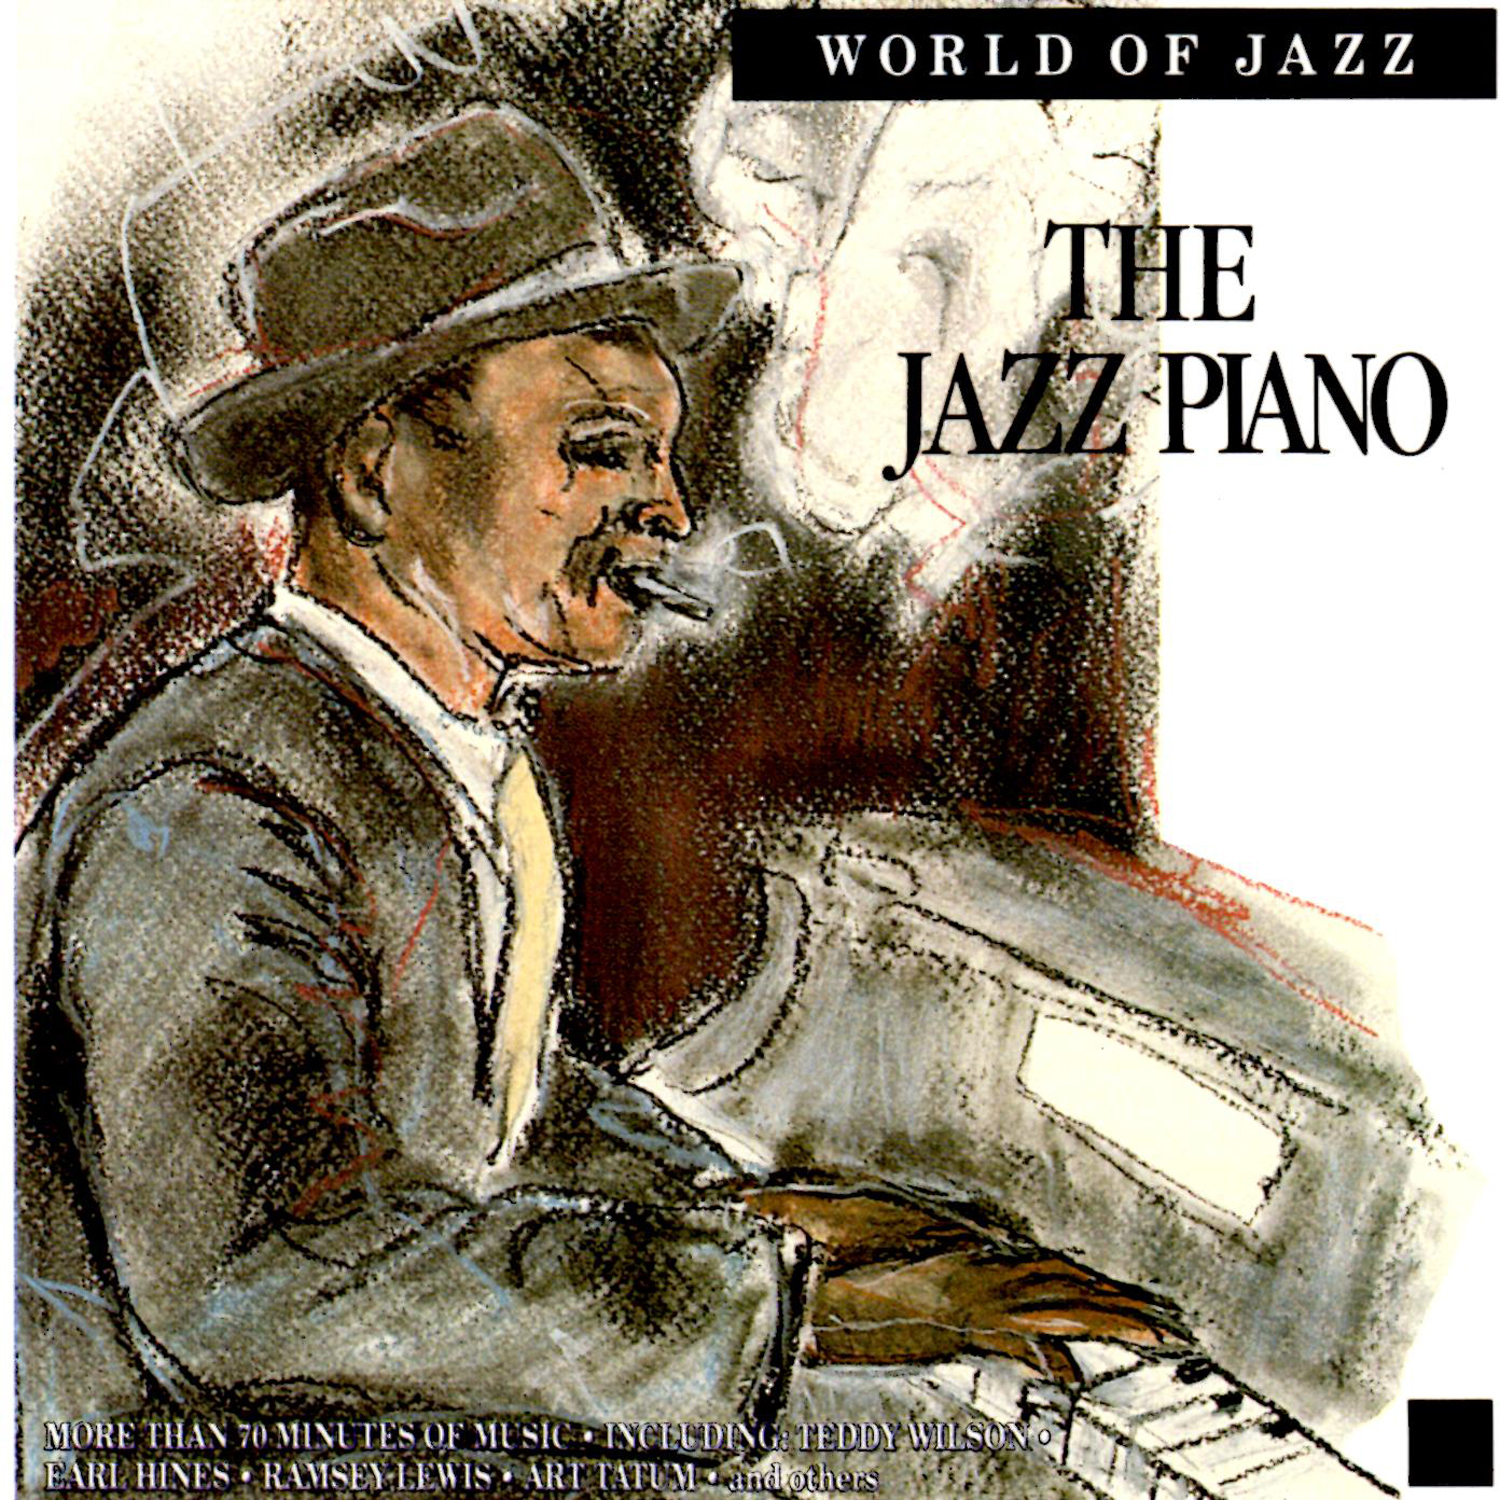 World of Jazz: The Jazz Piano